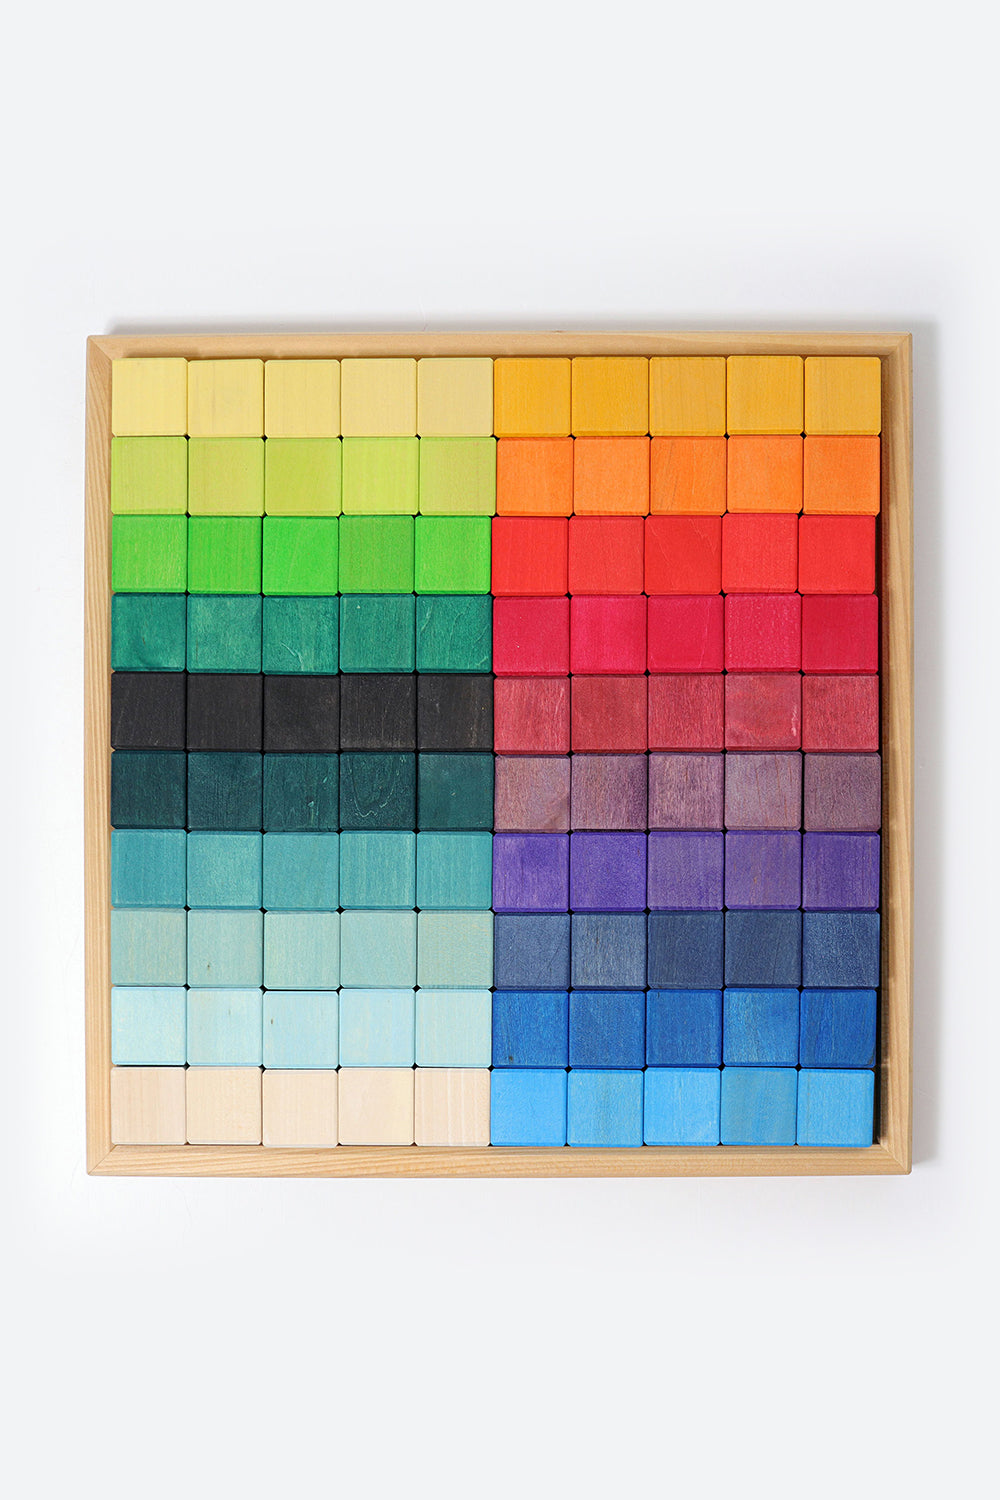 Grimm’s Mosaic Rainbow Large — 100 Pieces